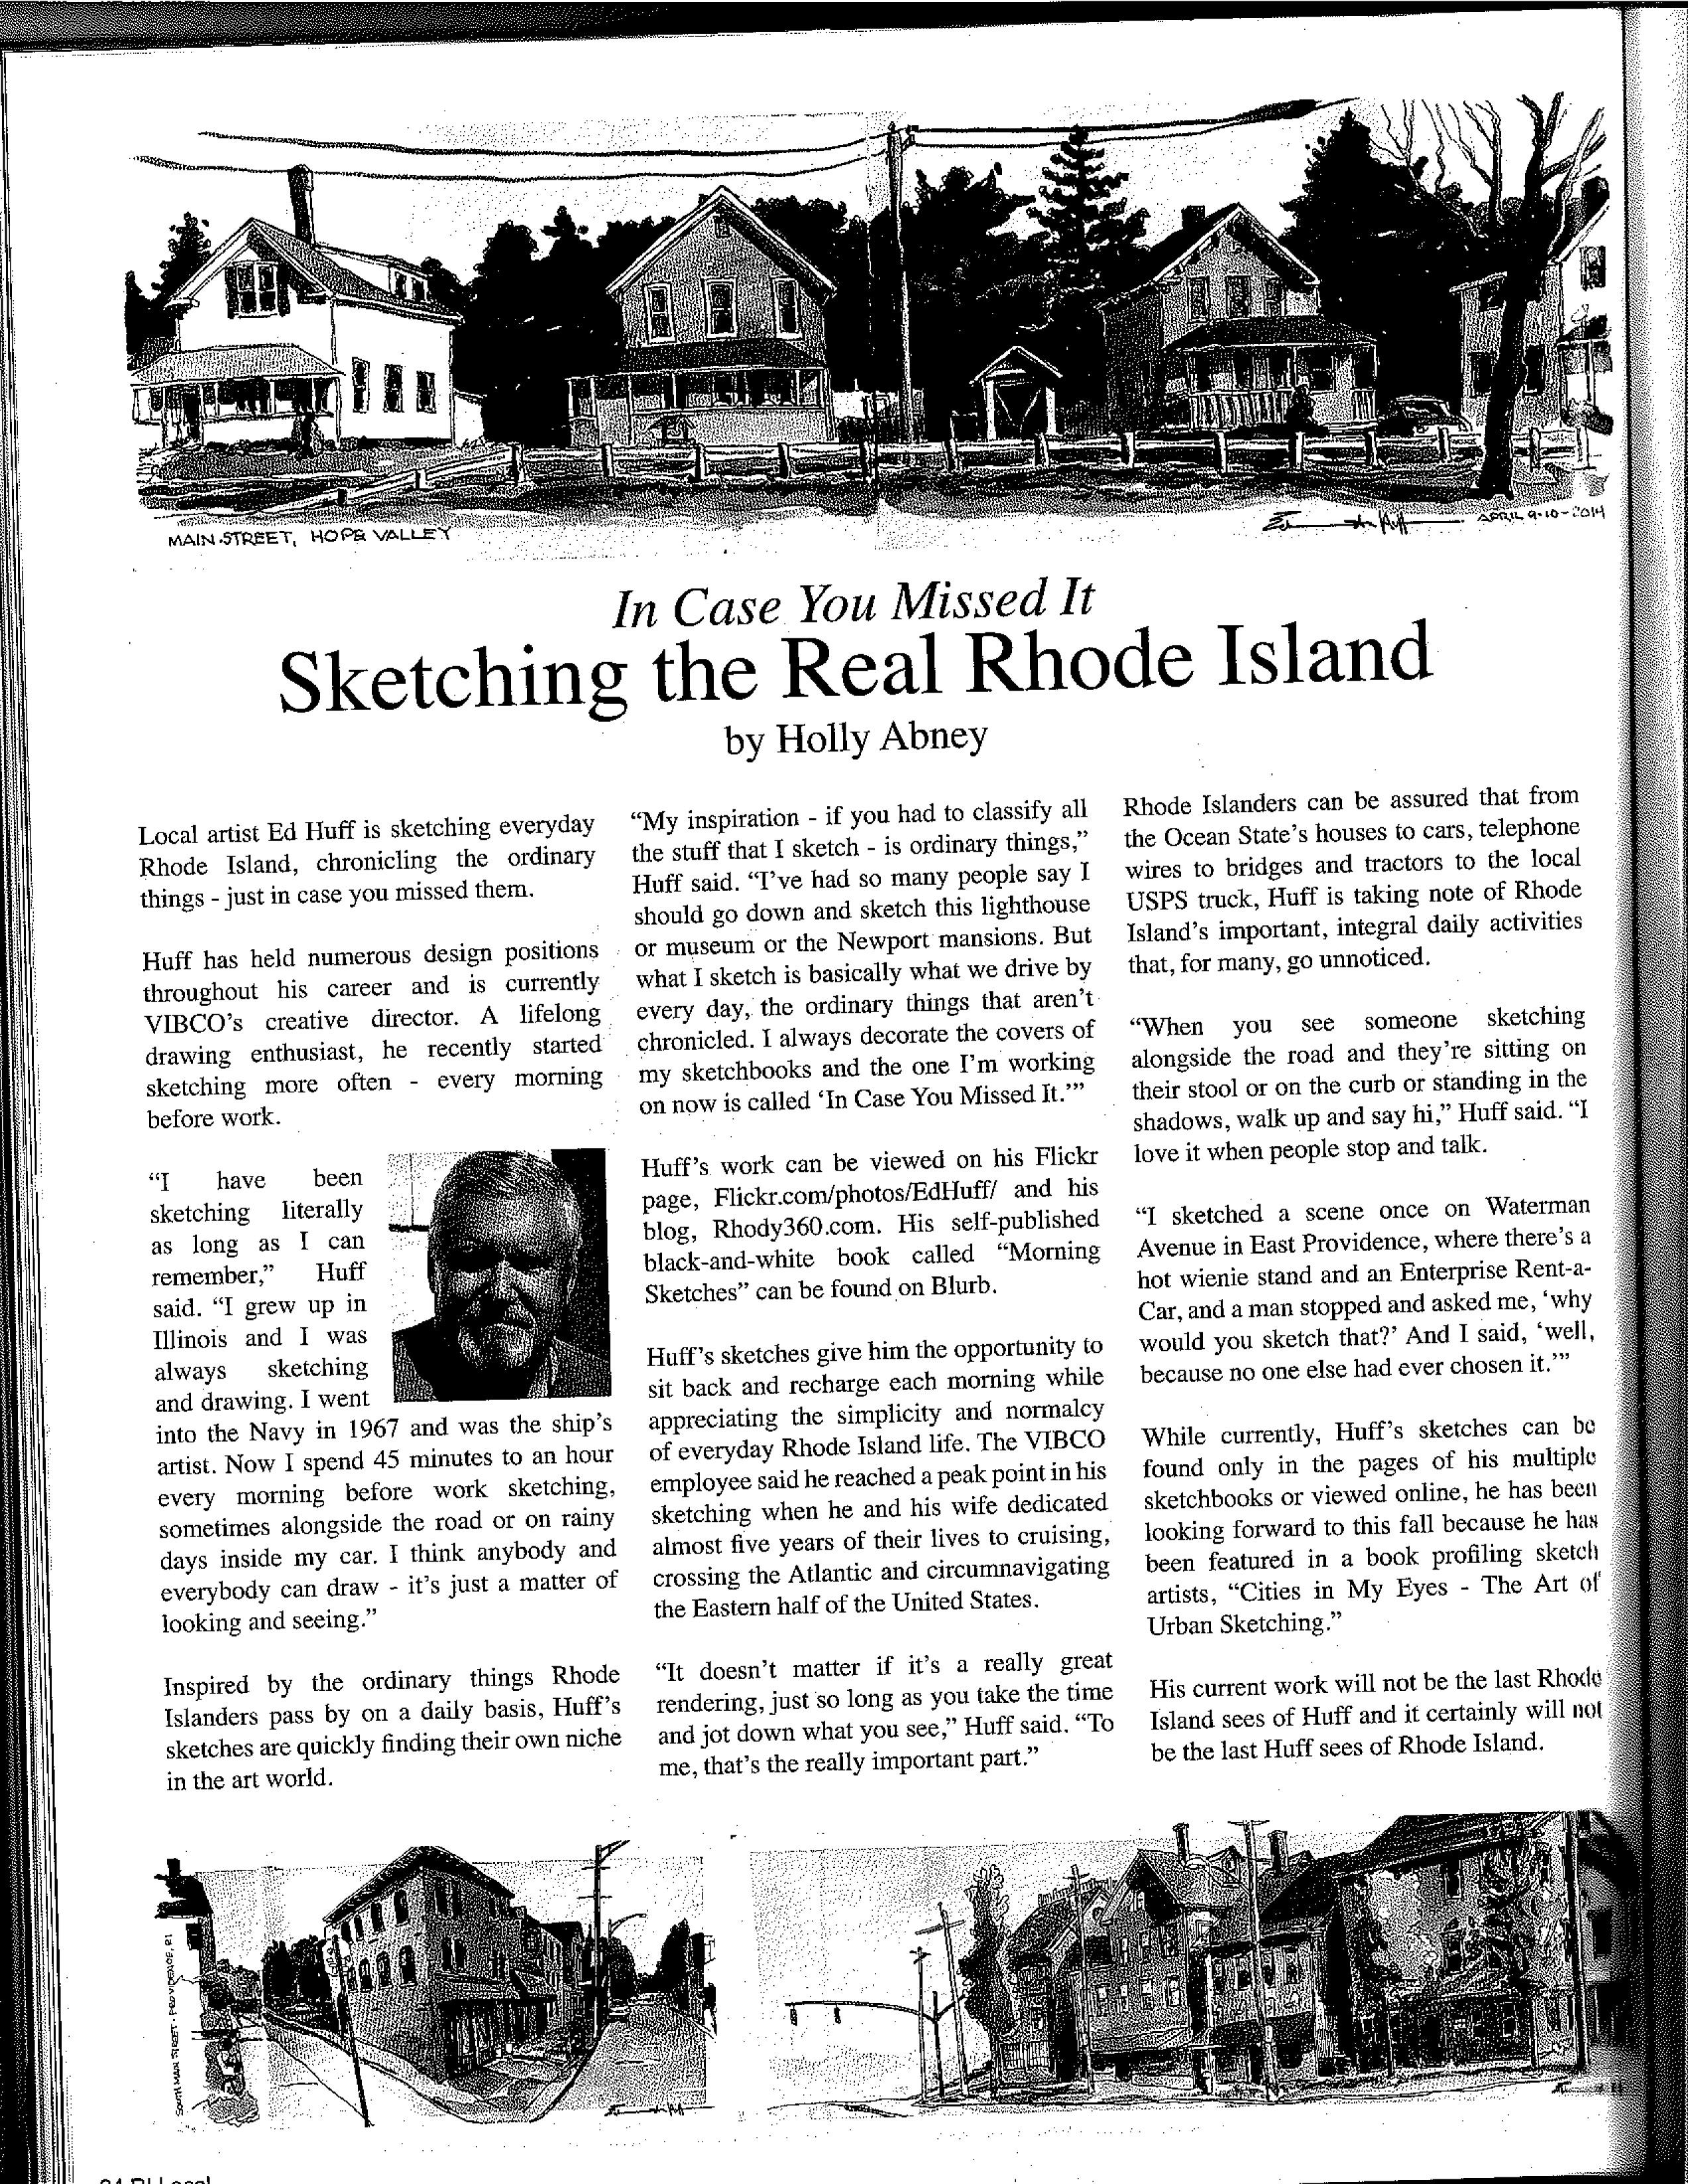 ed huff in rhode island local magazine